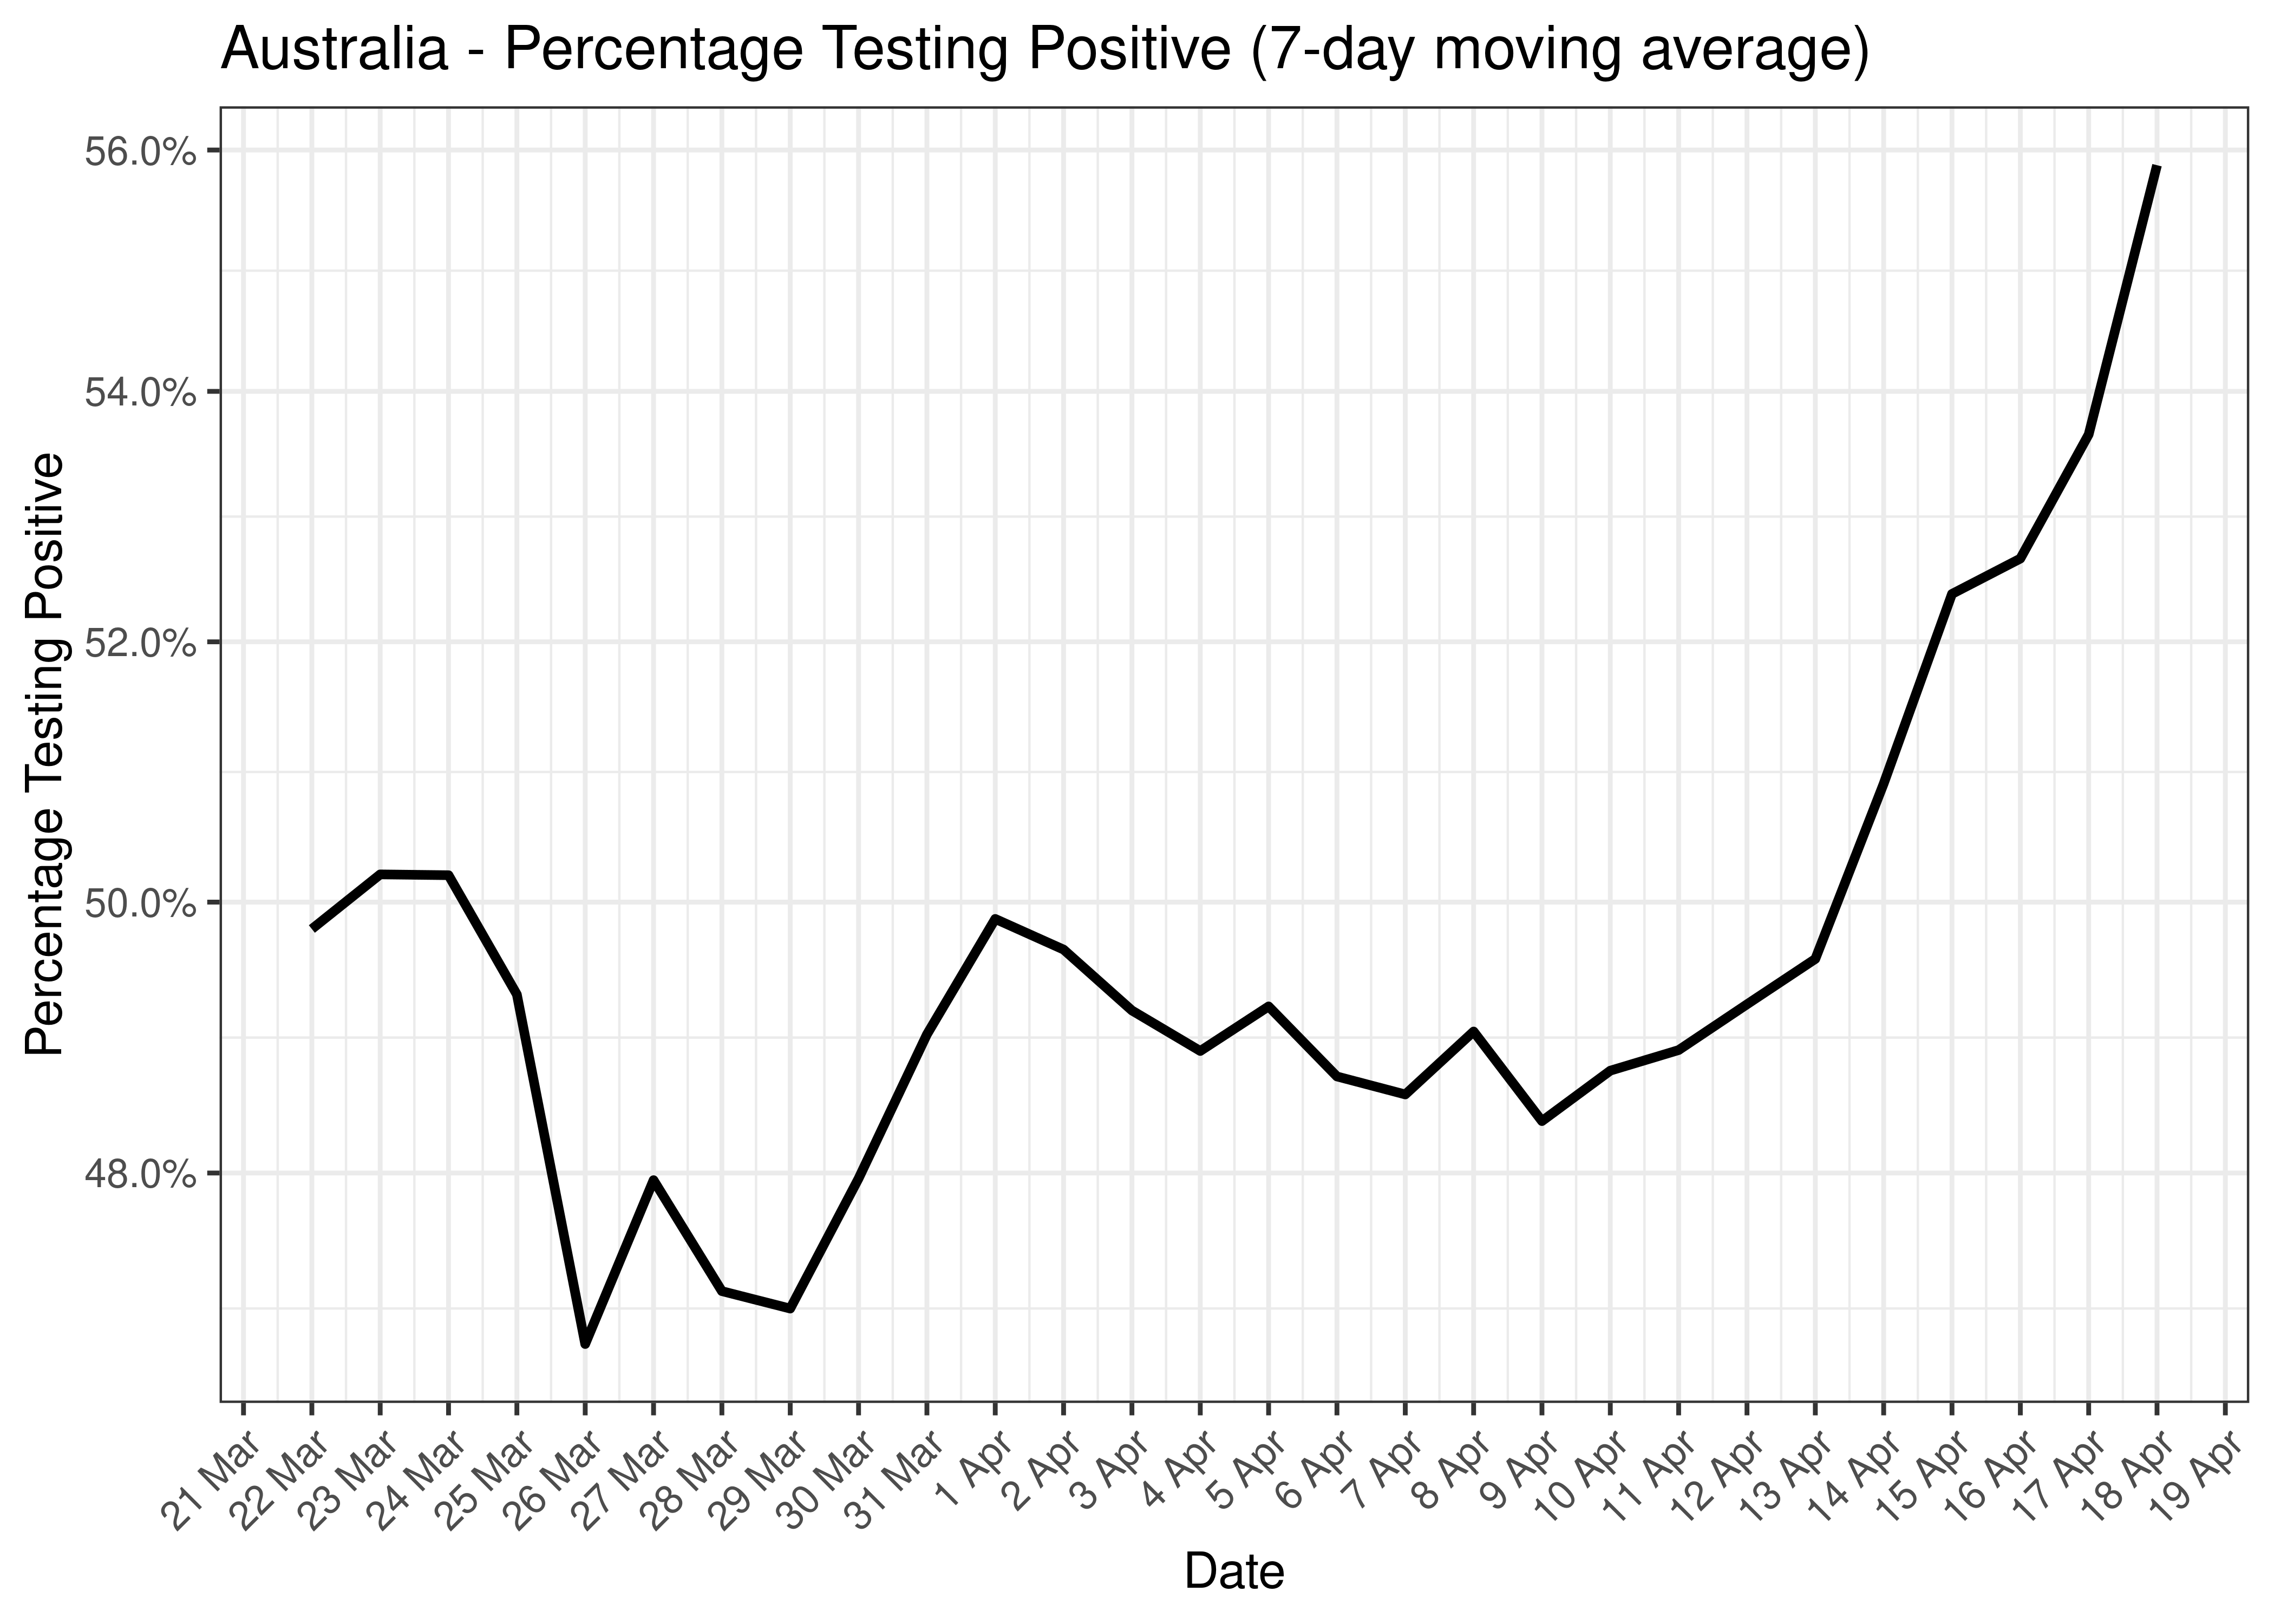 Australia - Percentage Testing Positive for Last 30 Days (7-day moving average)